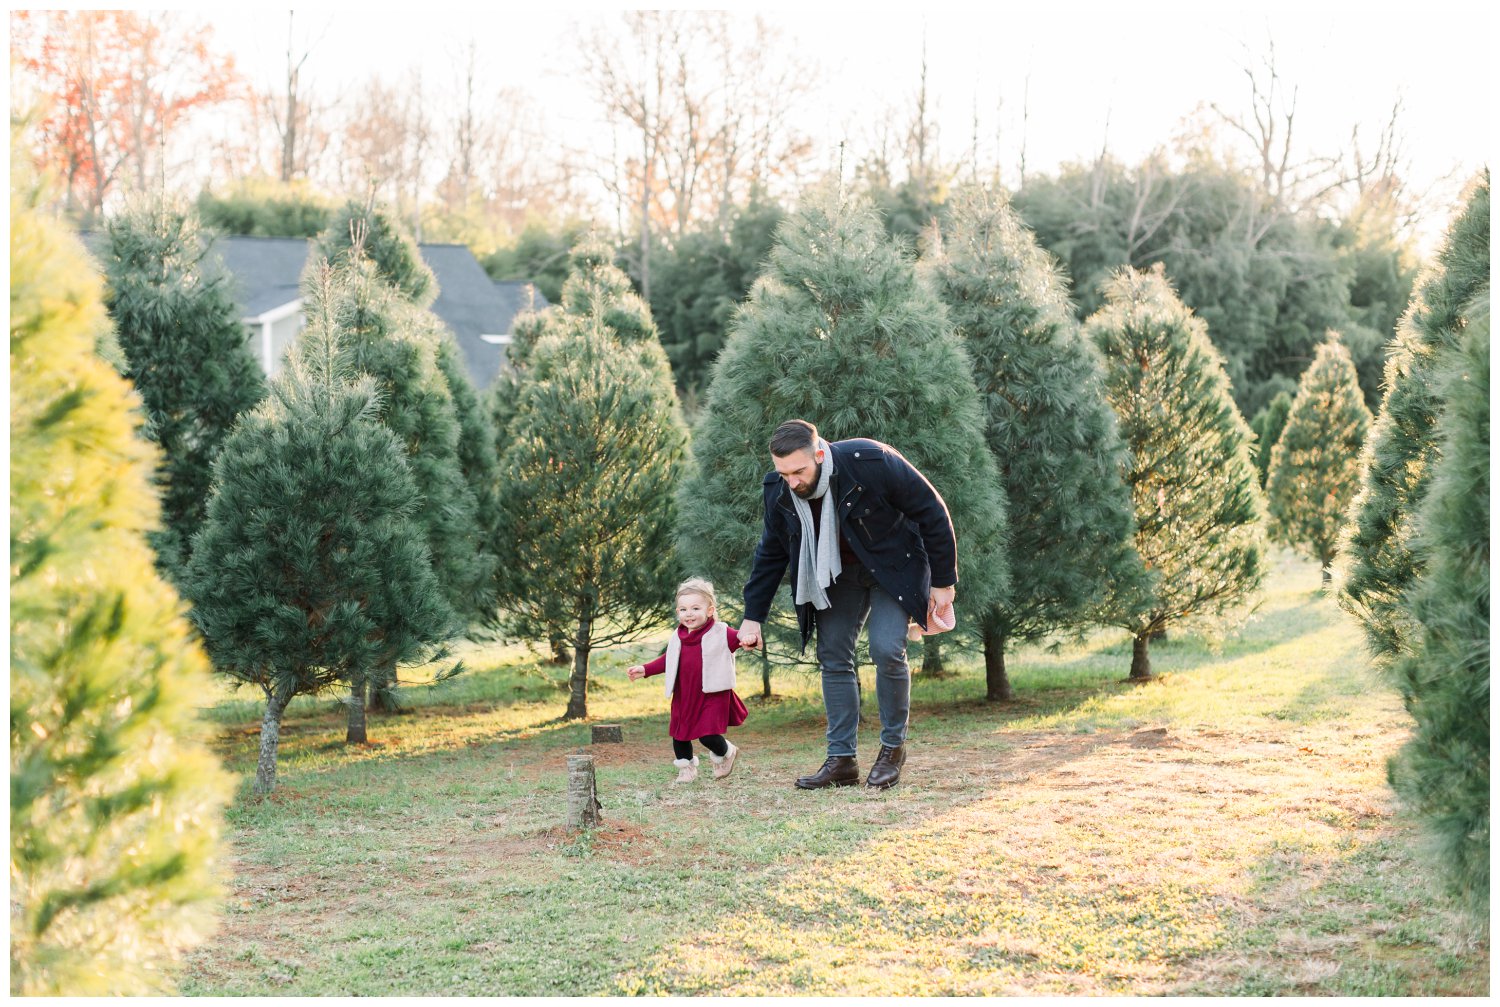 Grace Tree Farm Christmas family session in North Carolina